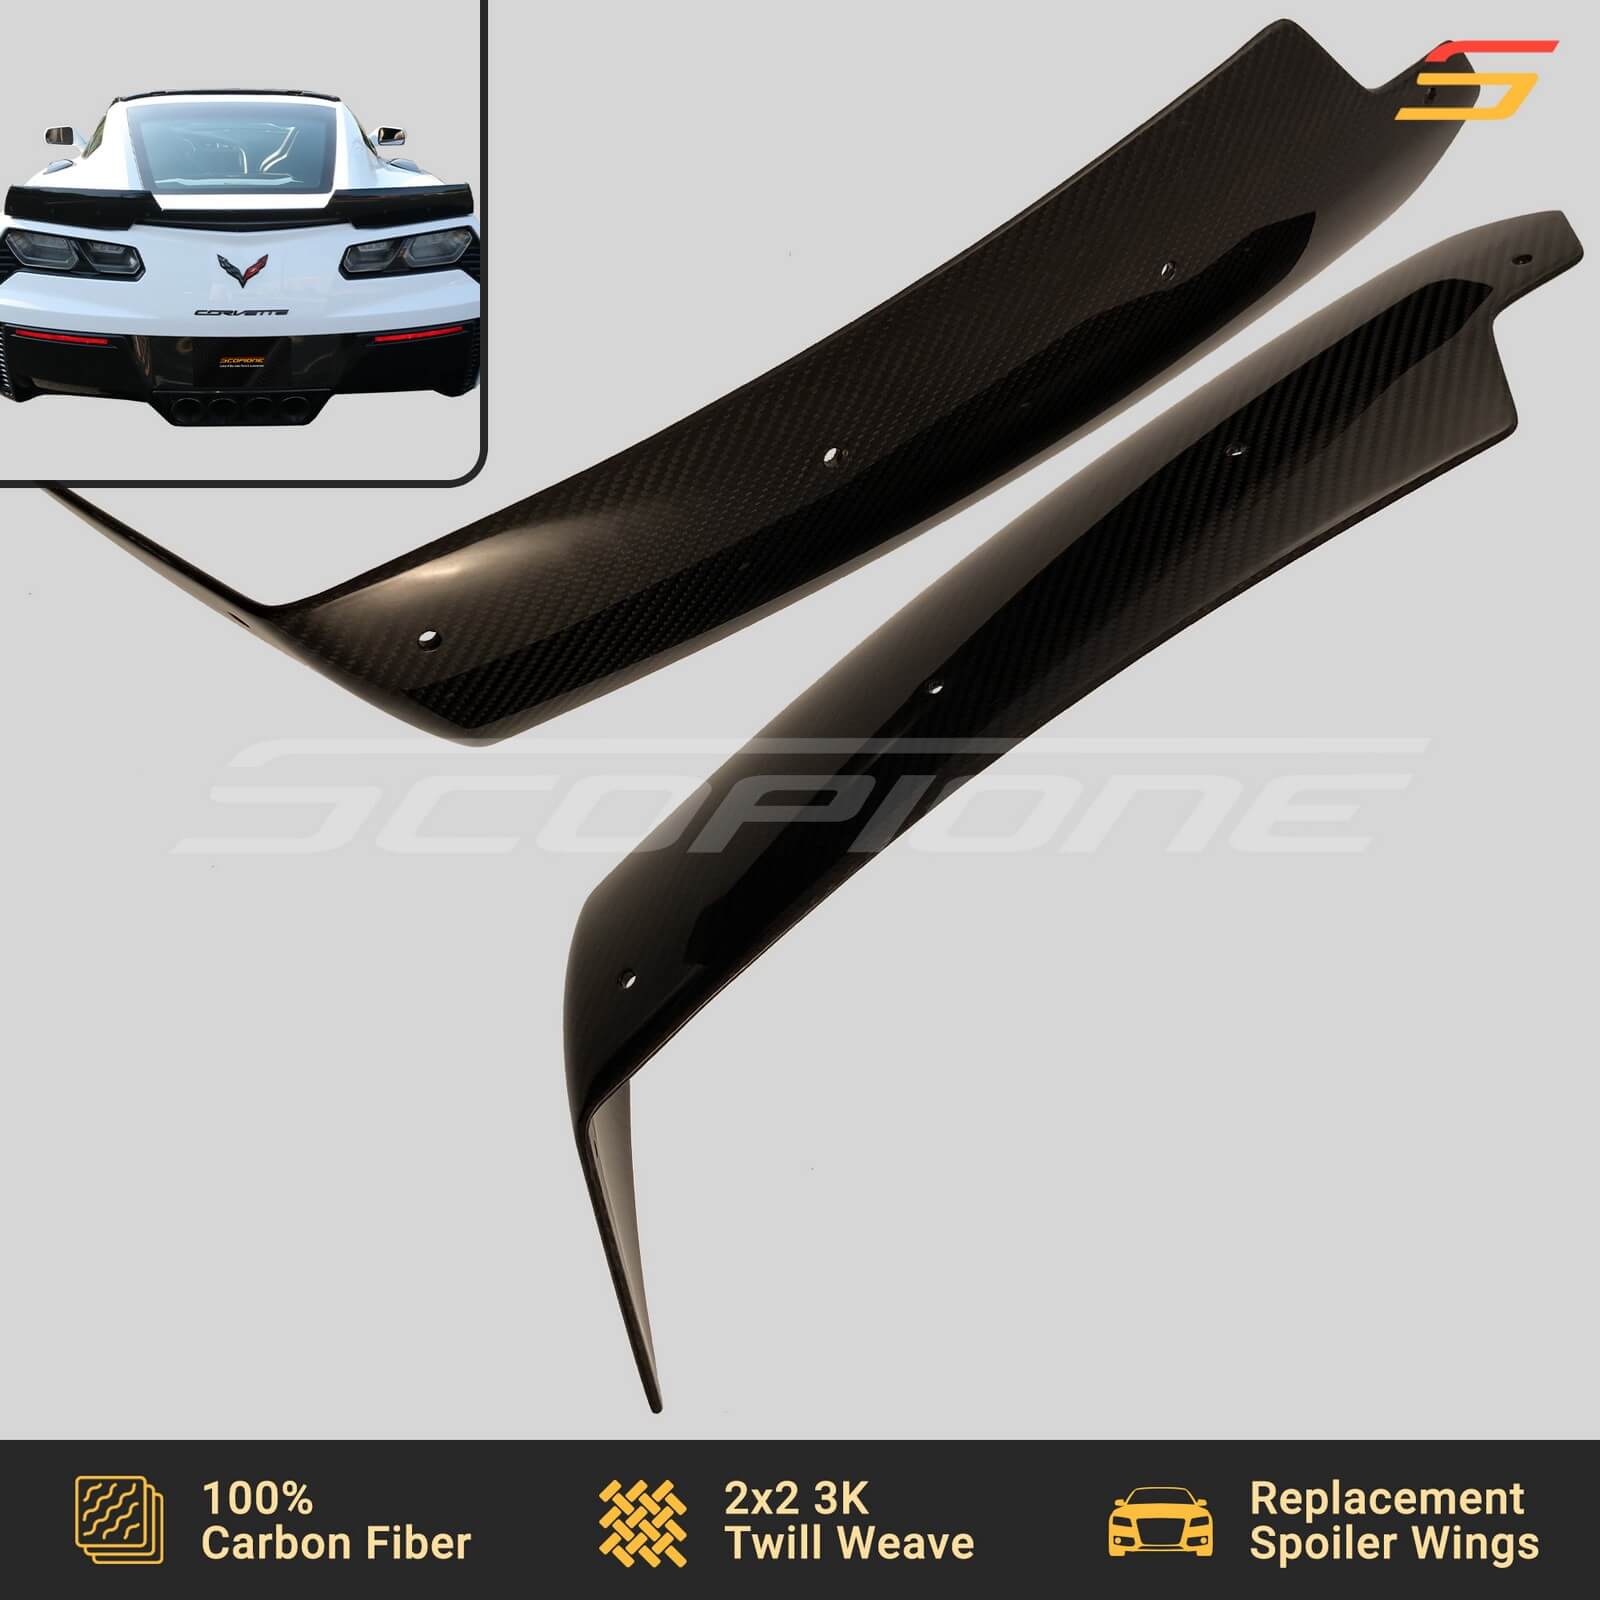 Scopione Carbon Fiber Rear Spoiler Winglets for Corvette C7 Z06 GS